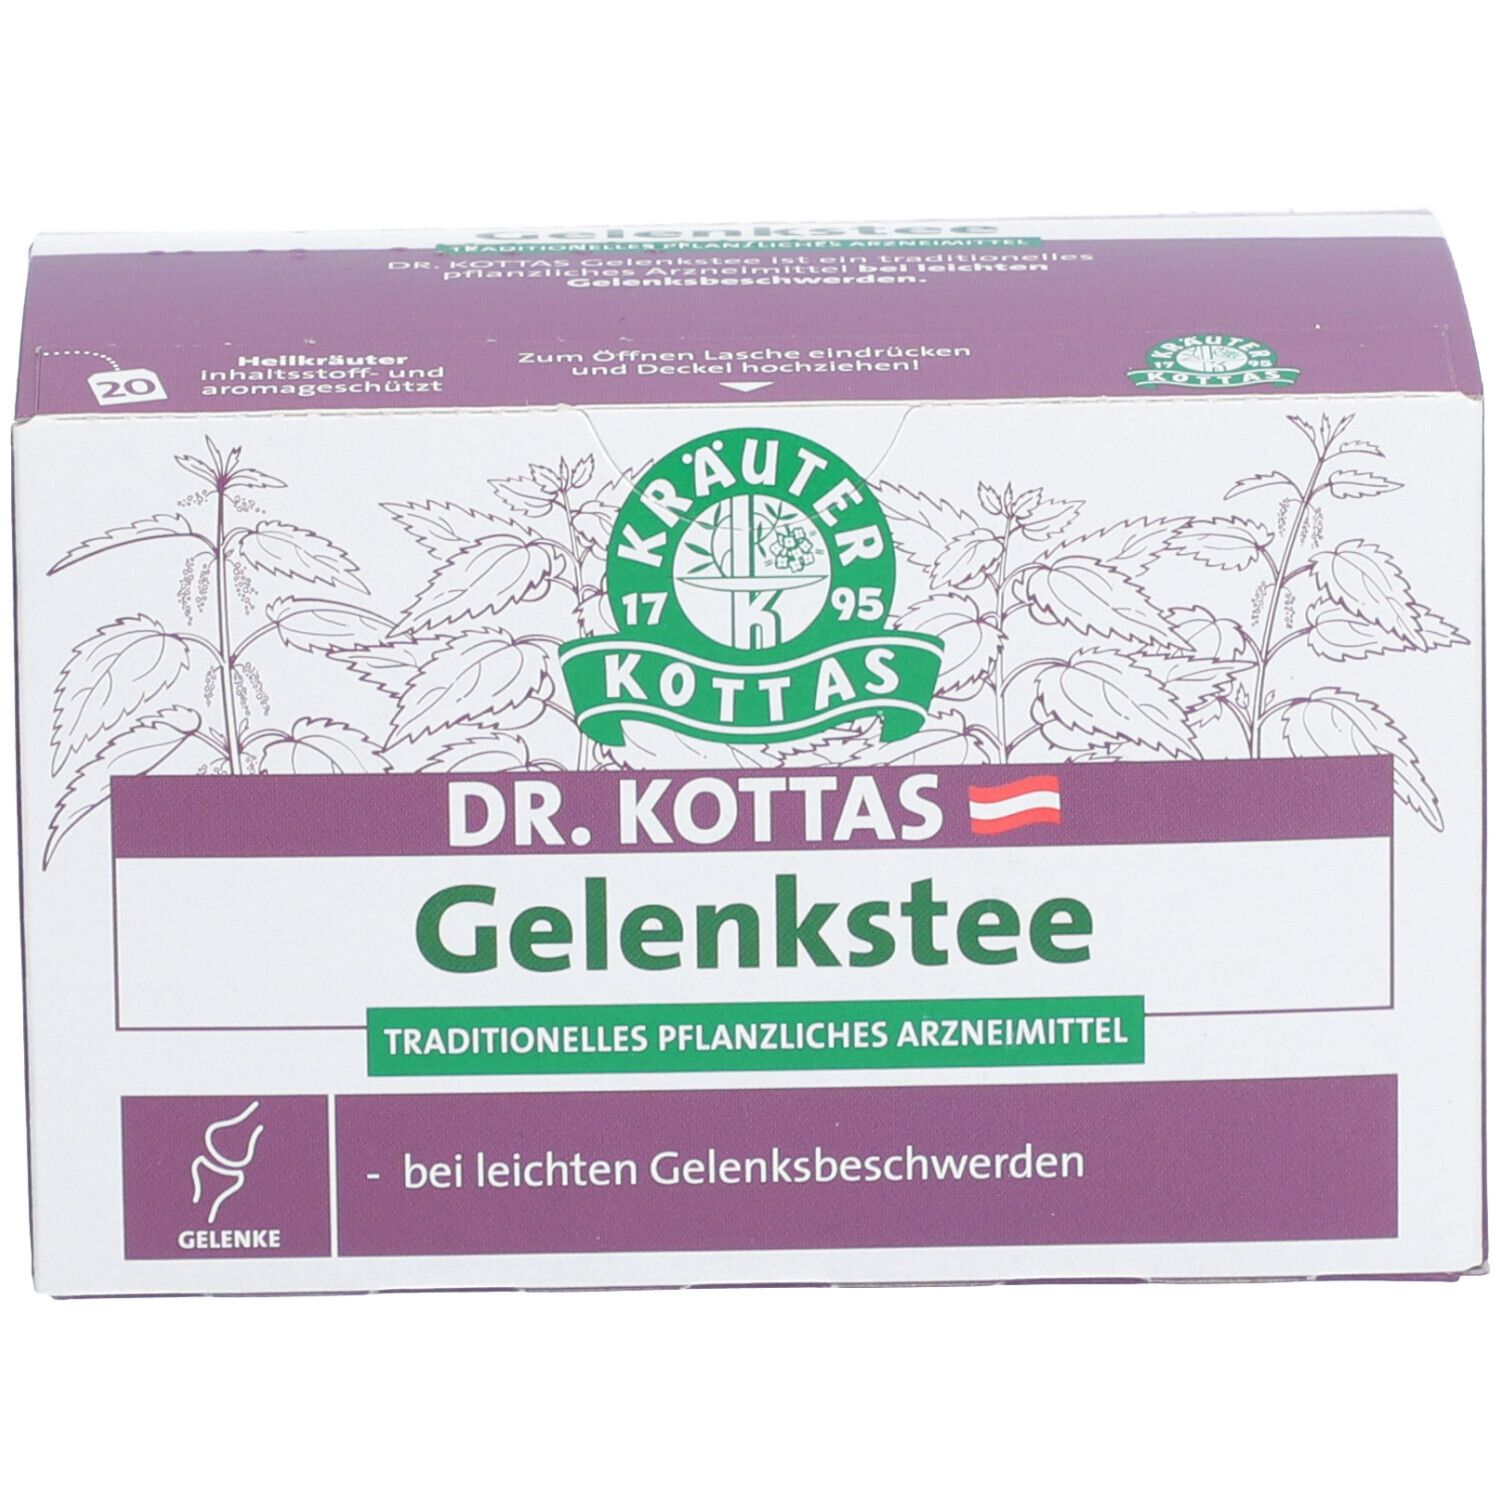 DR. KOTTAS Gelenkstee